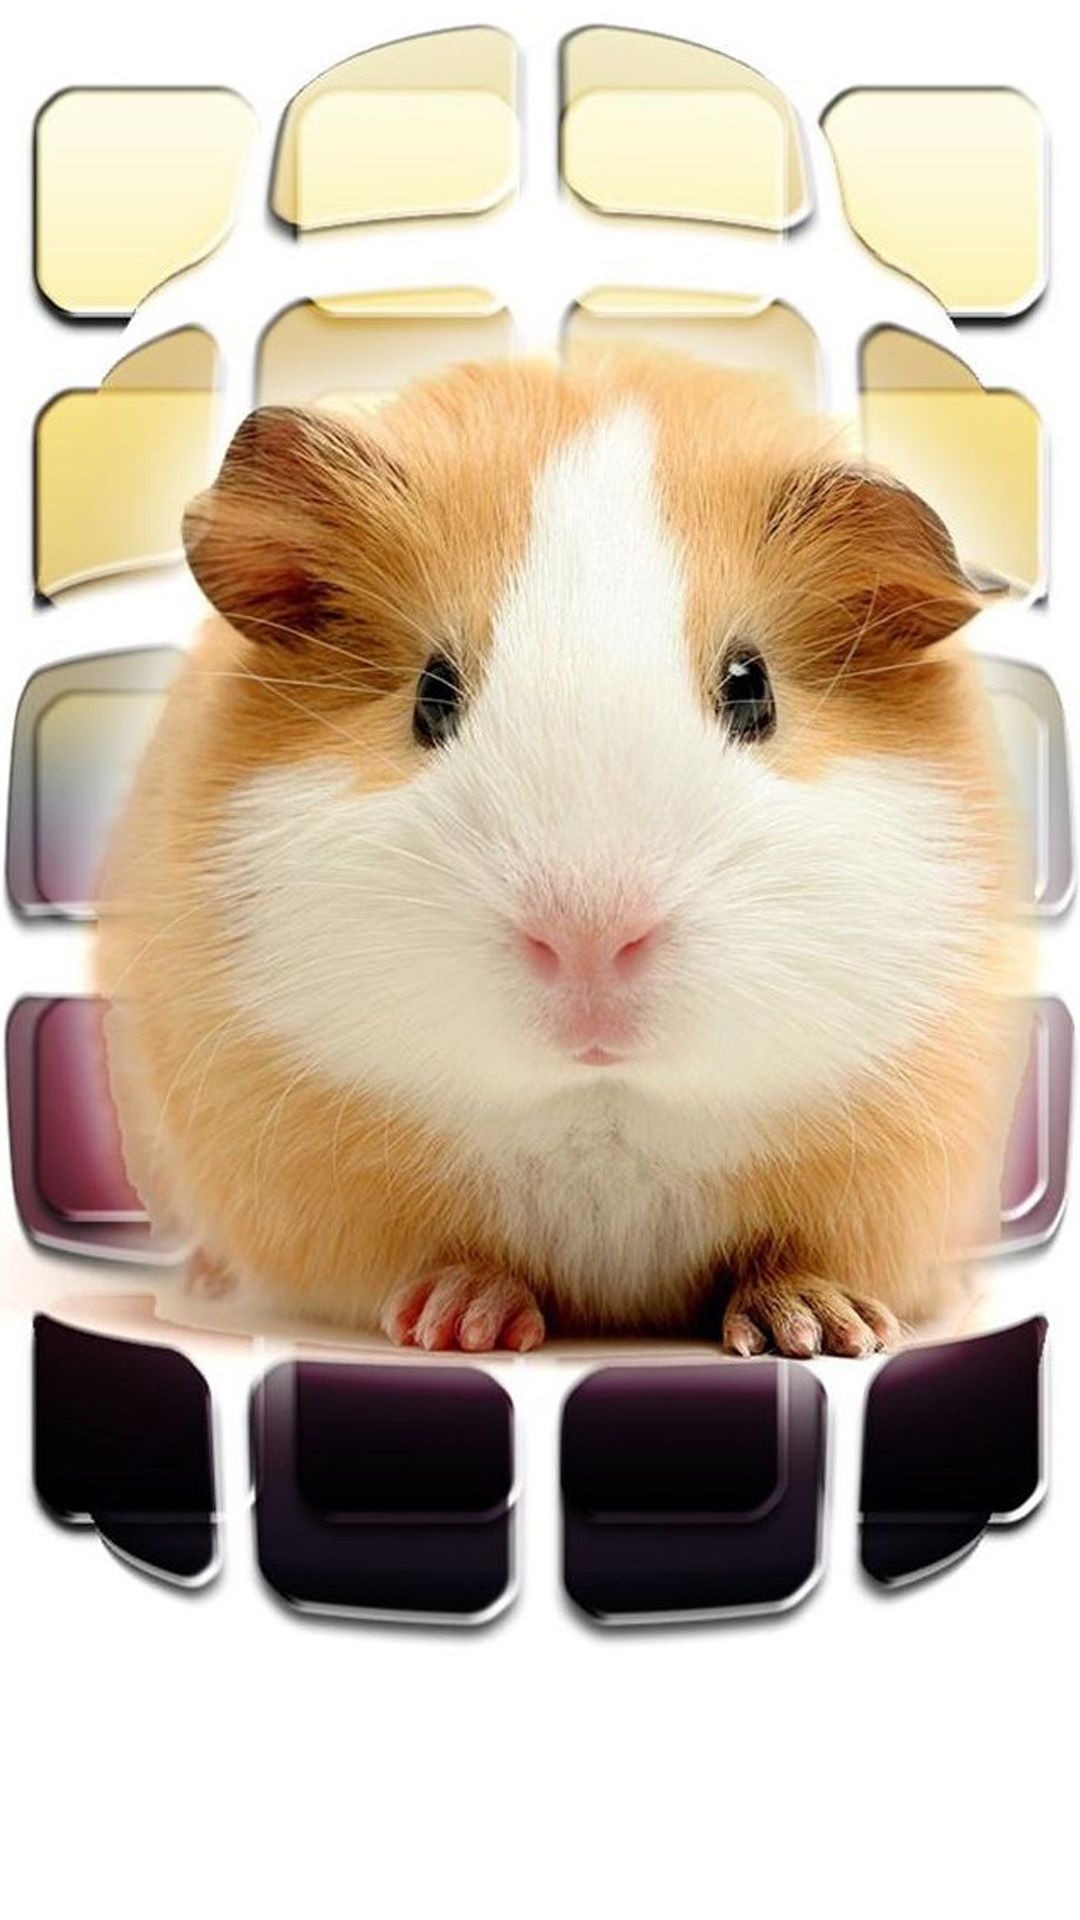 Cute Little Rat Macro iPhone 8 Wallpaper Free Download